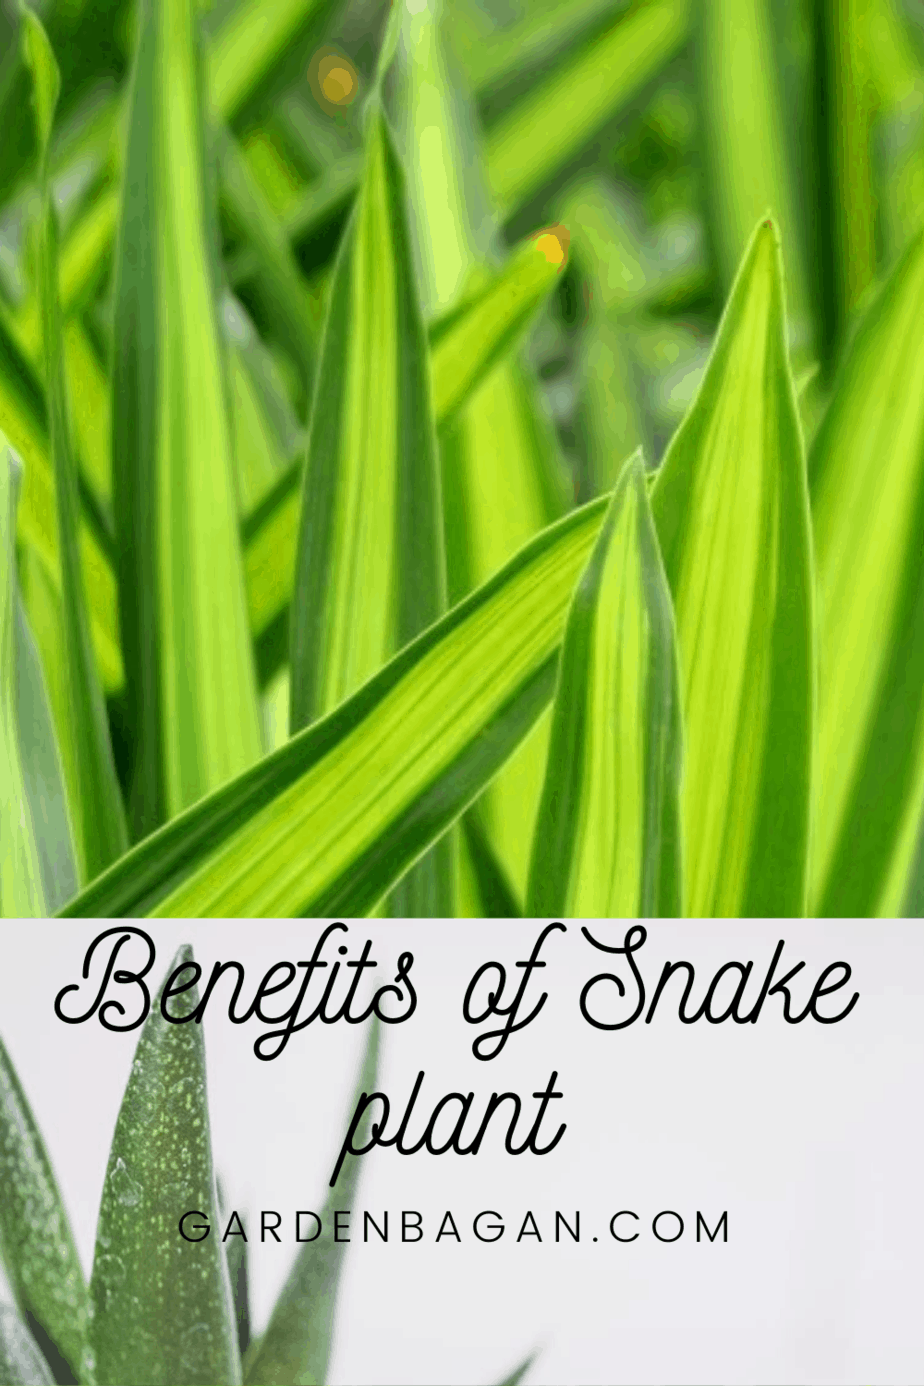 Benefits of Snake plant